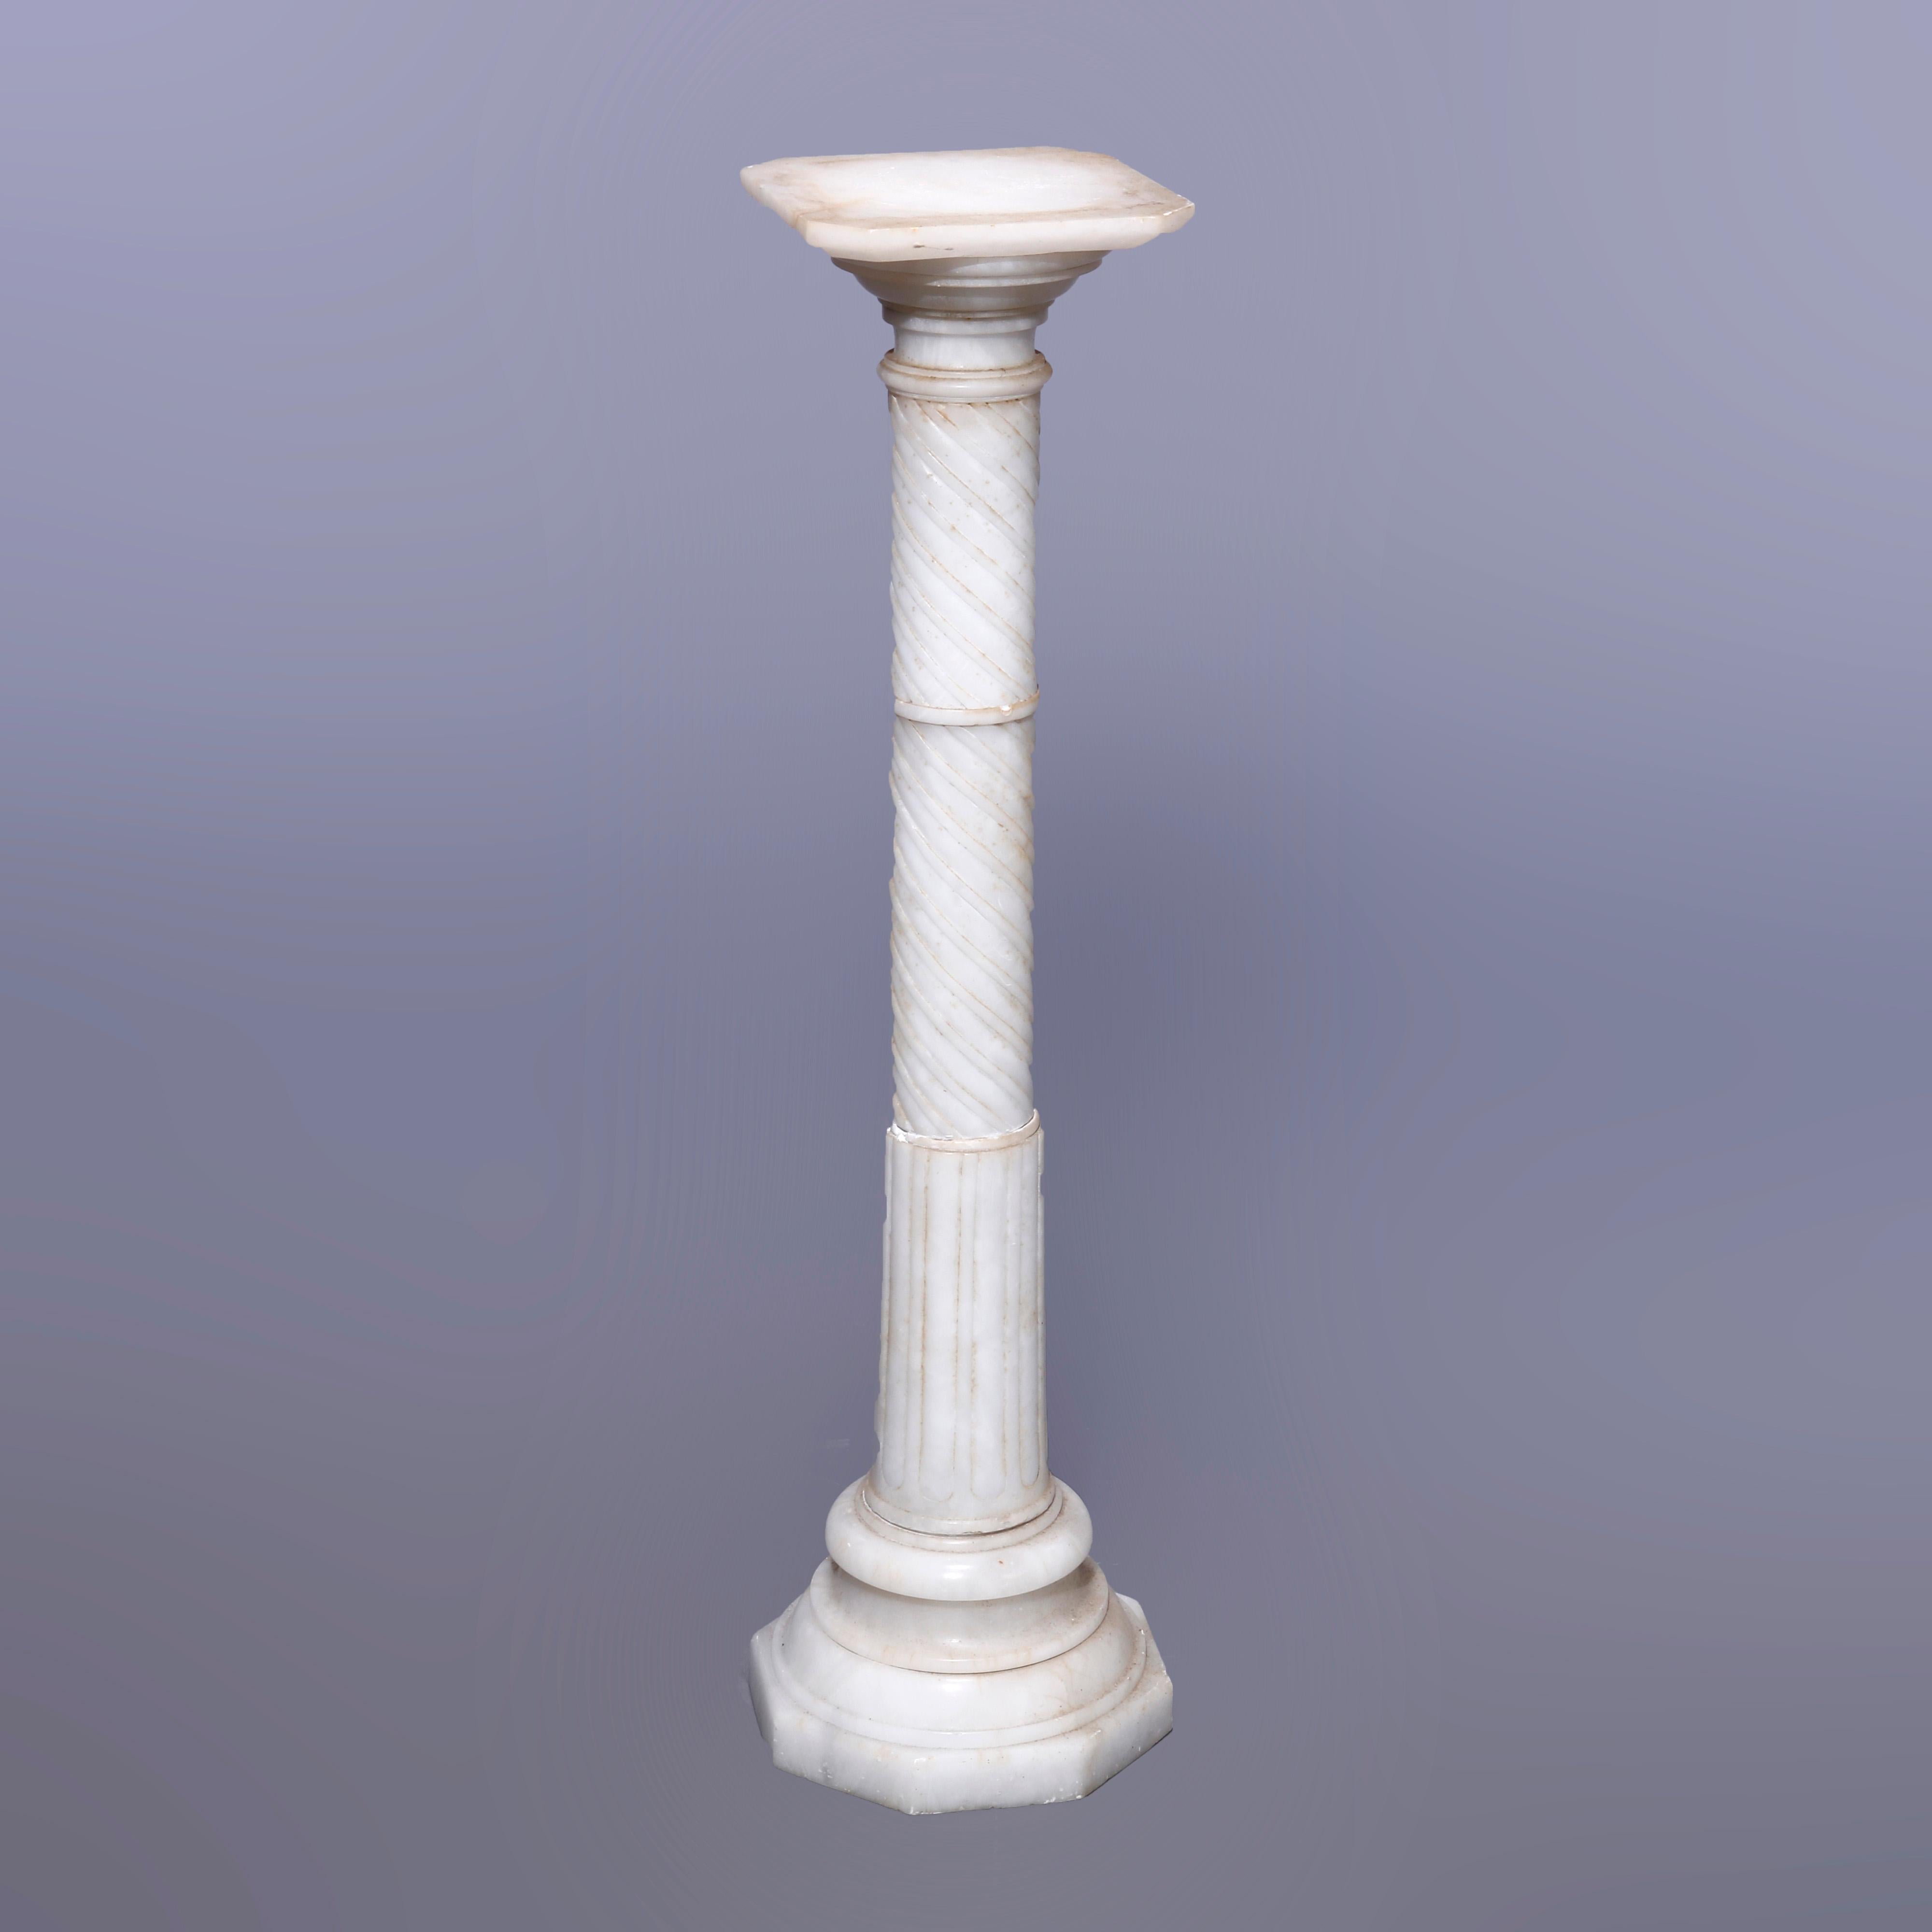 European Antique Neoclassical Carved Alabaster Sculpture Pedestal, Rope Twist Form, 1890 For Sale